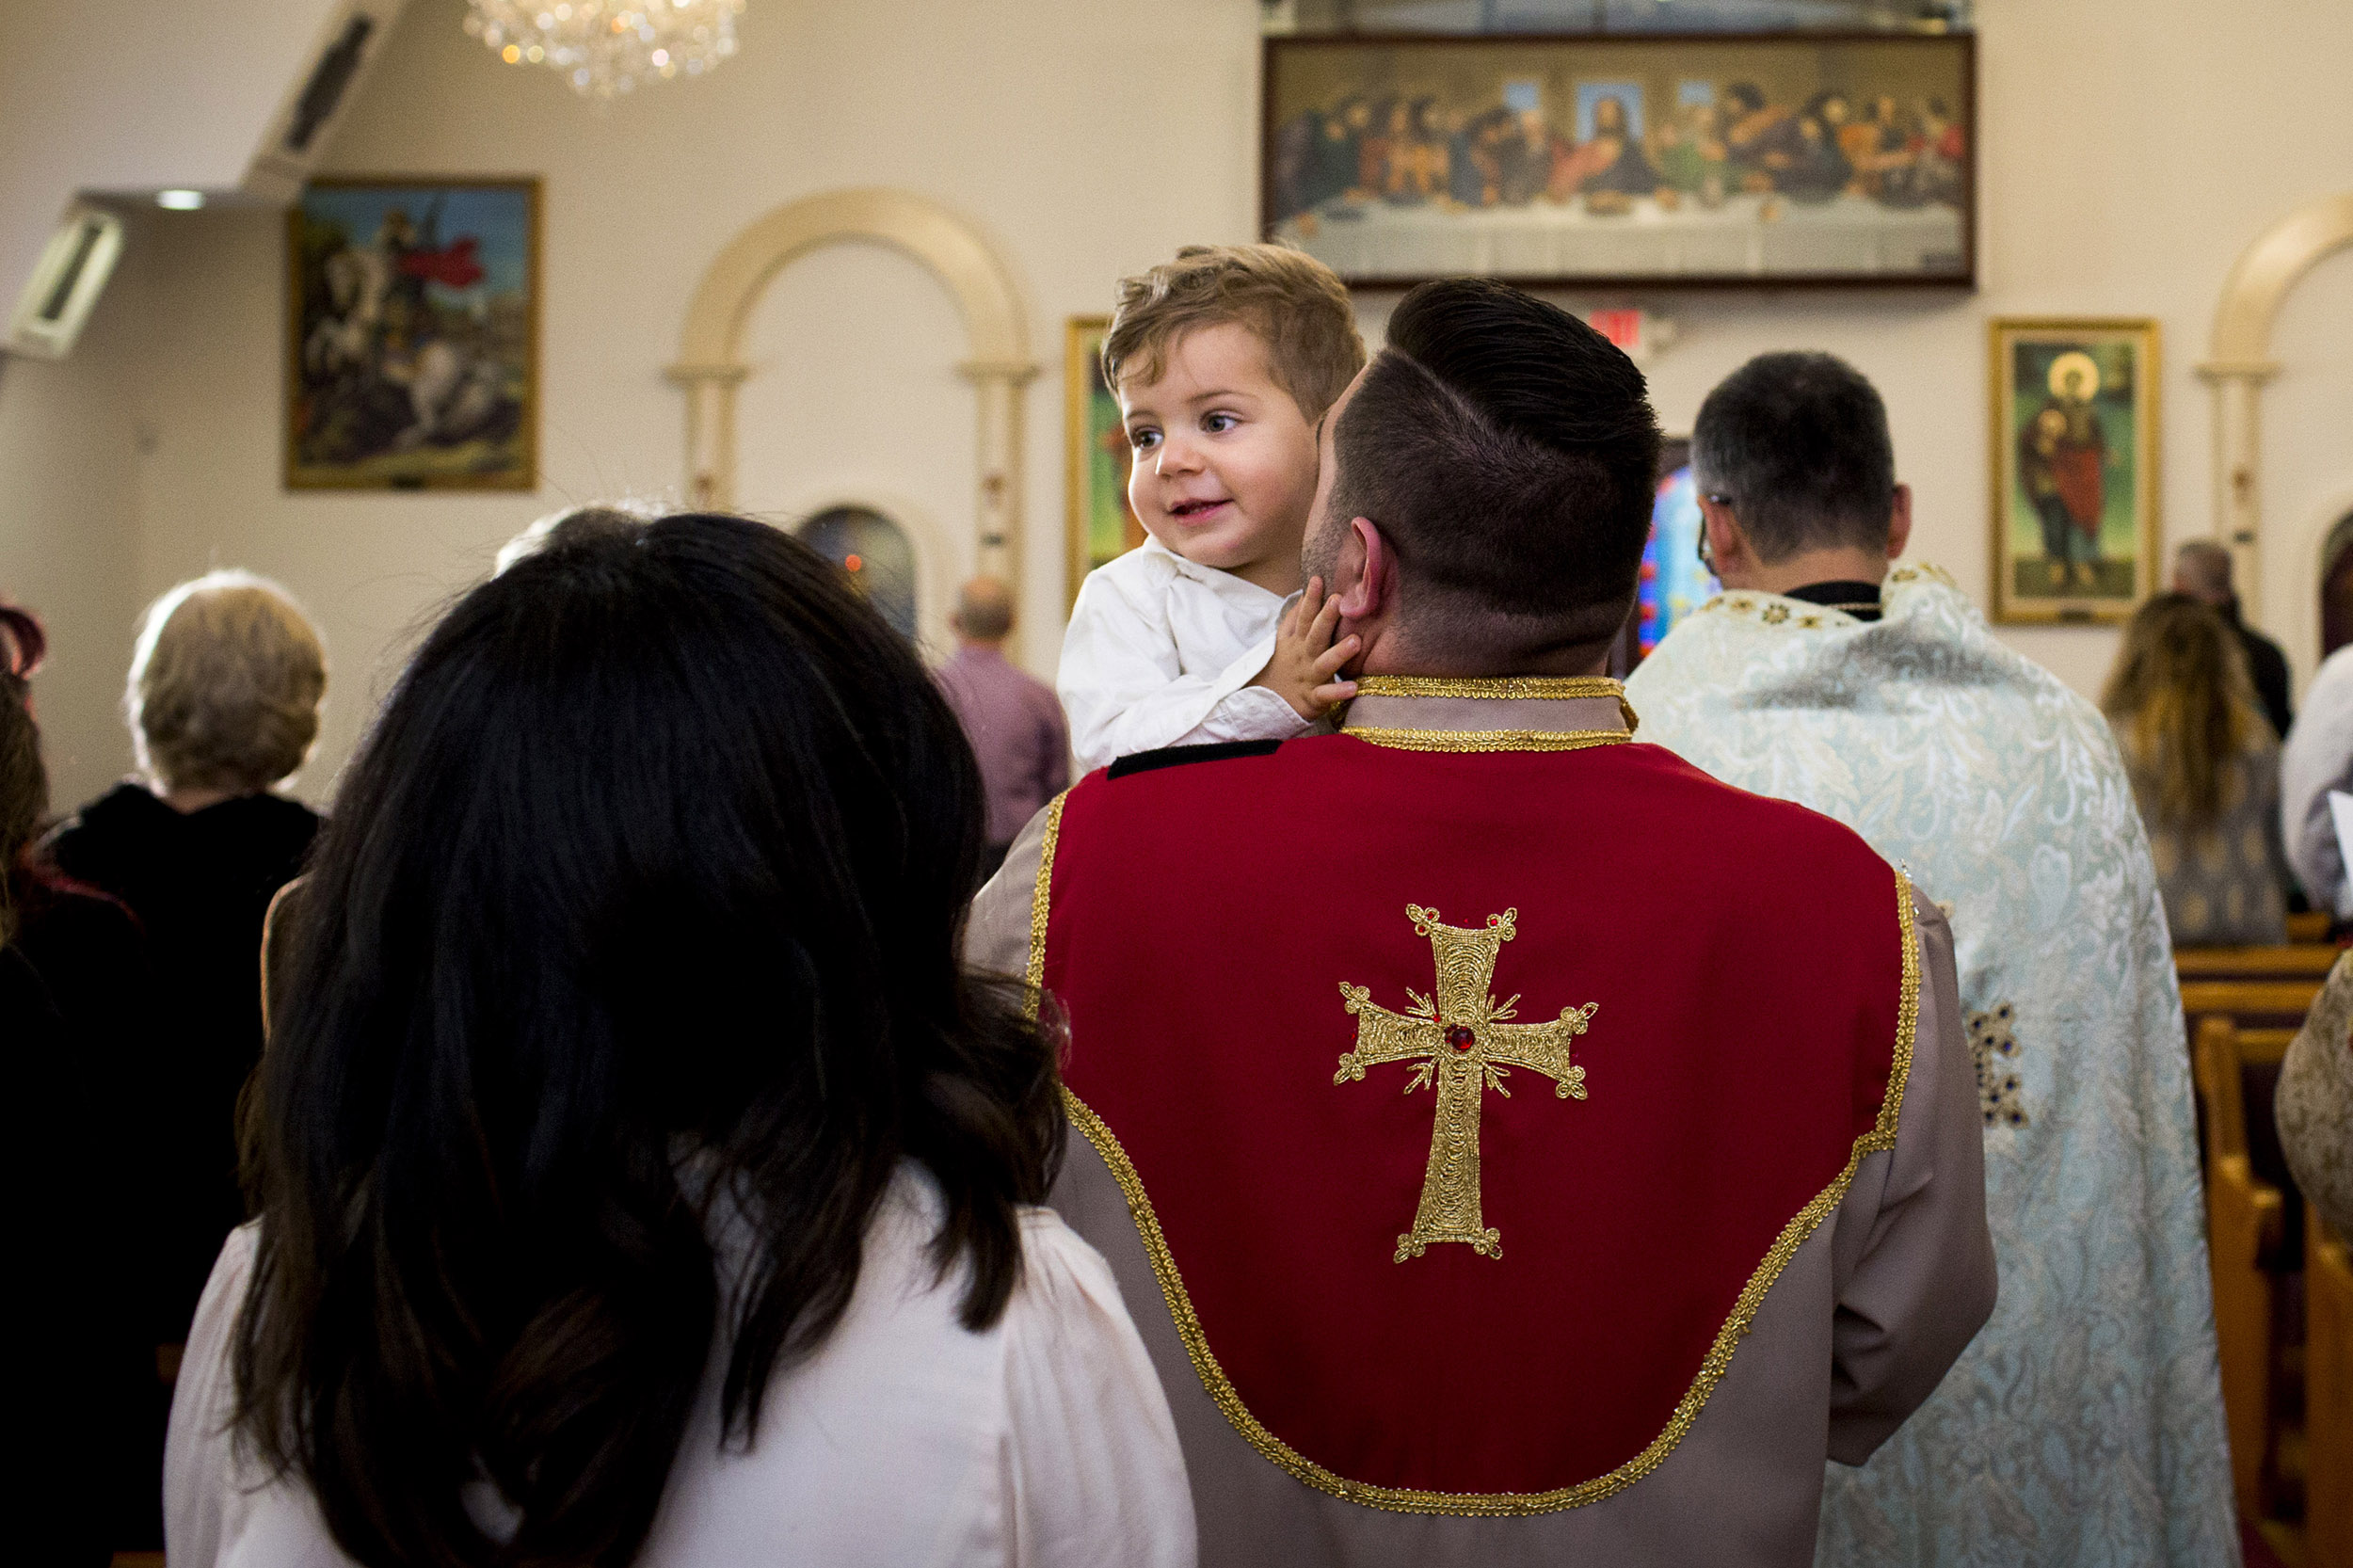 Armenian baptism photos by Los Angeles photographer, Heather DeCamp at Saint Sarfis Armenian Apostolic Church of Pasadena and little white church